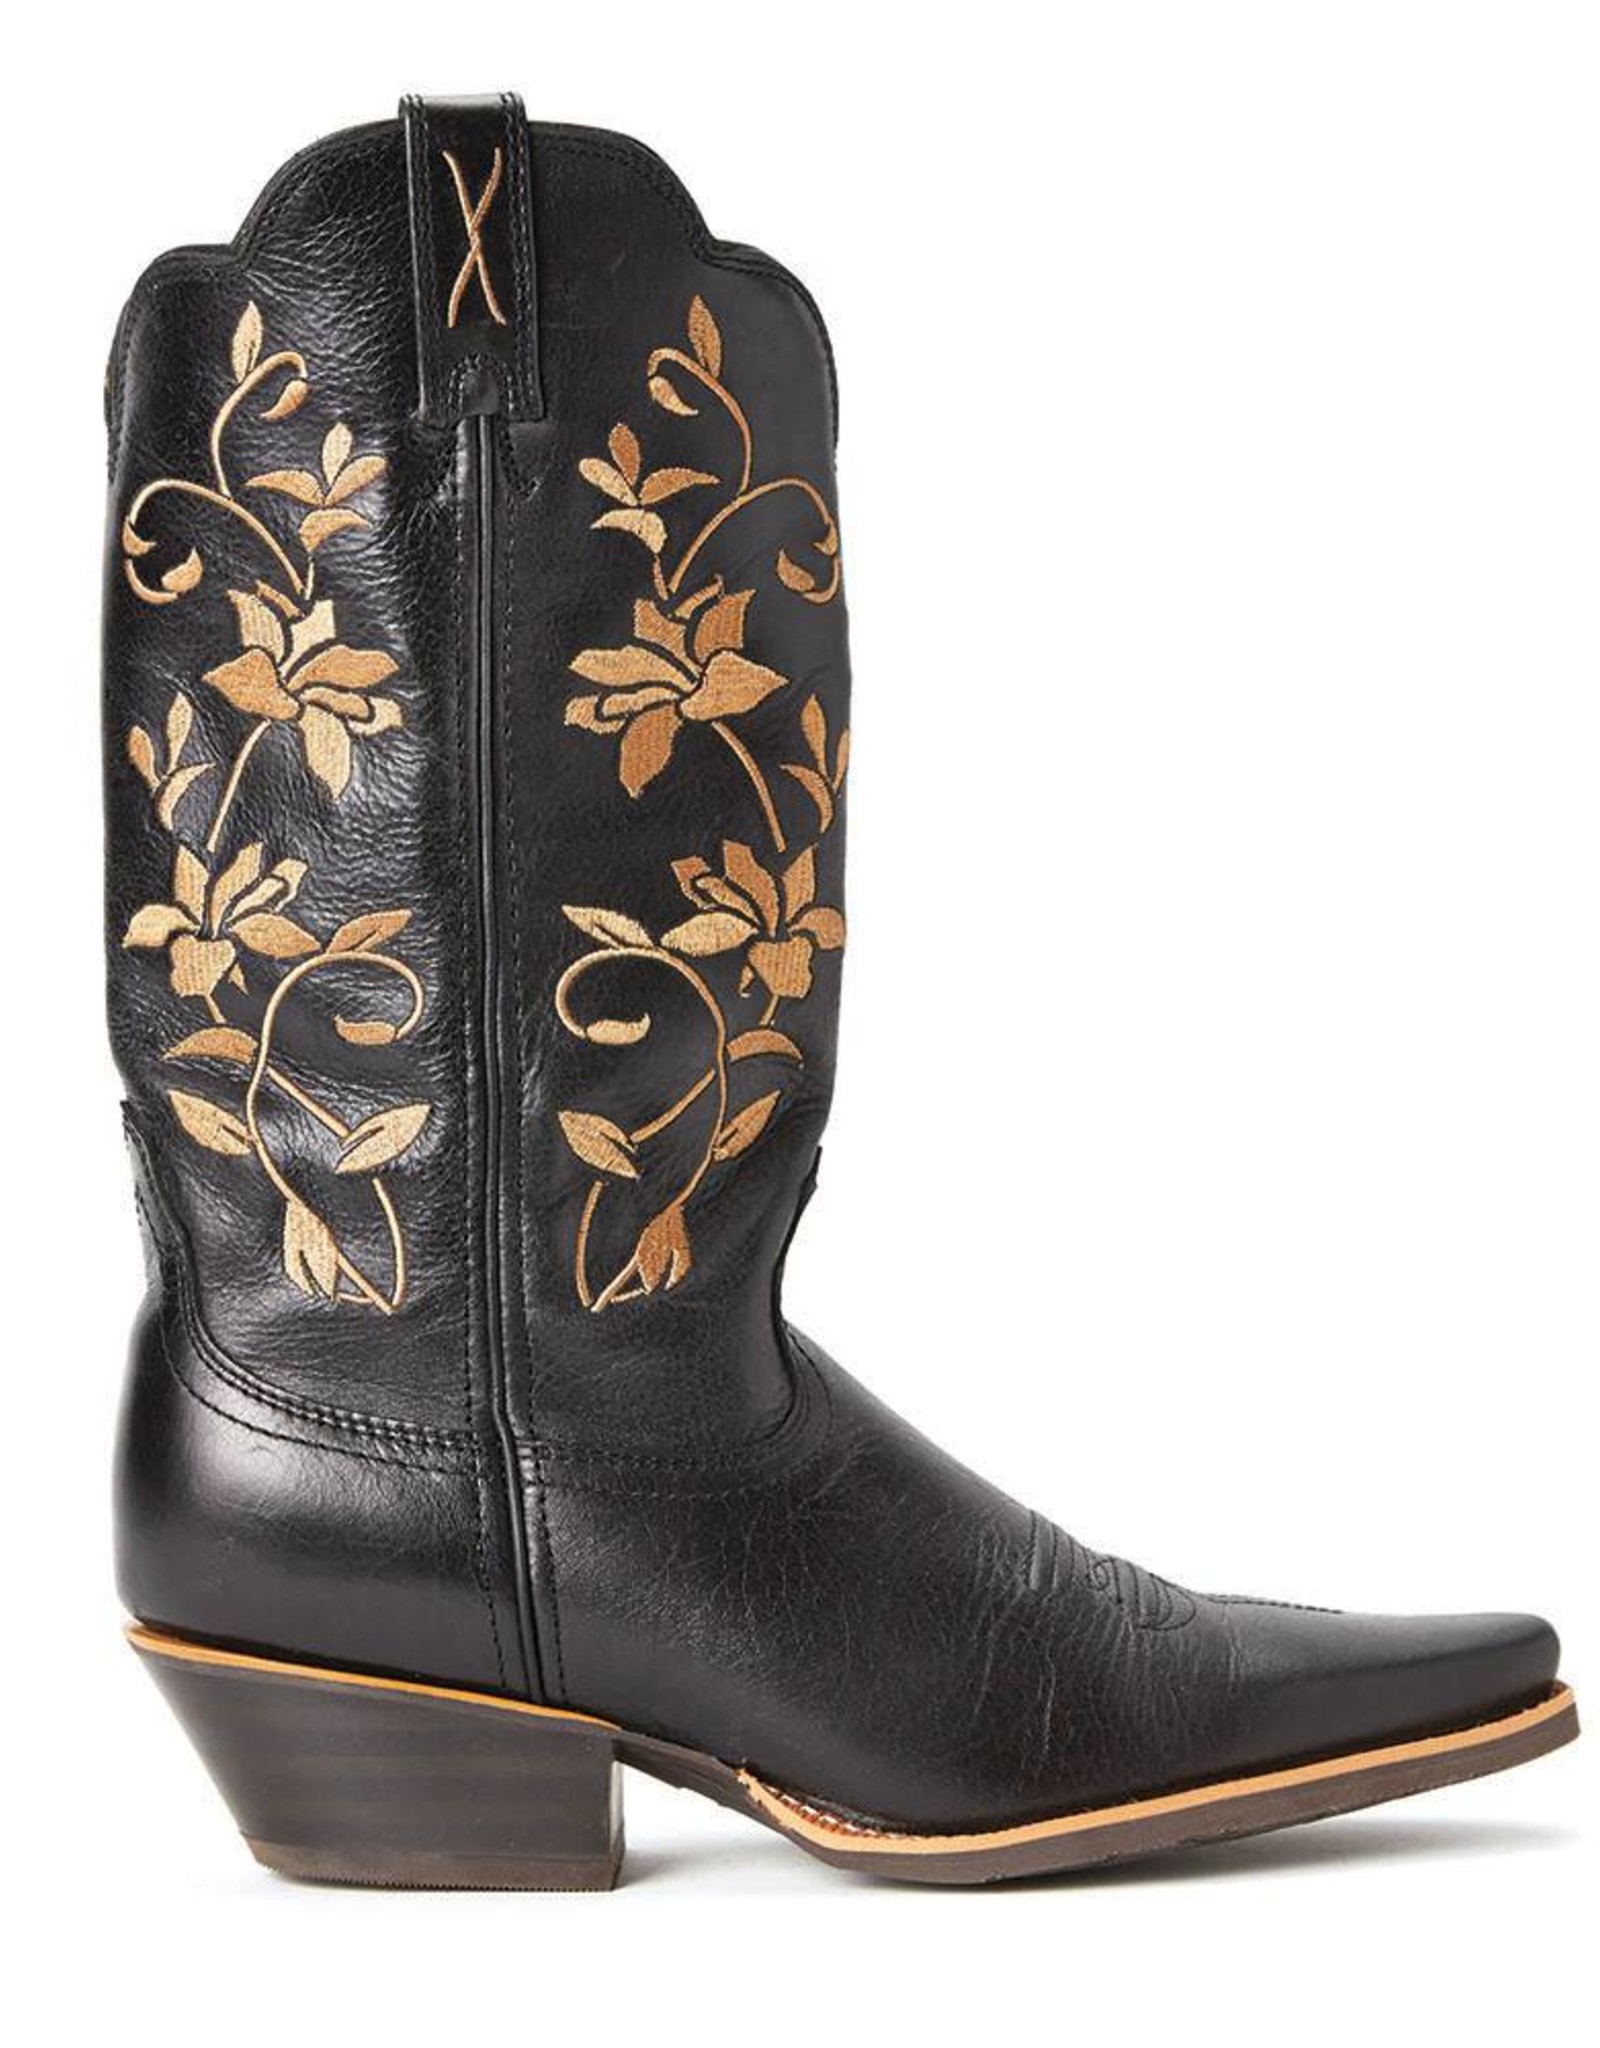 women's western boots size 9